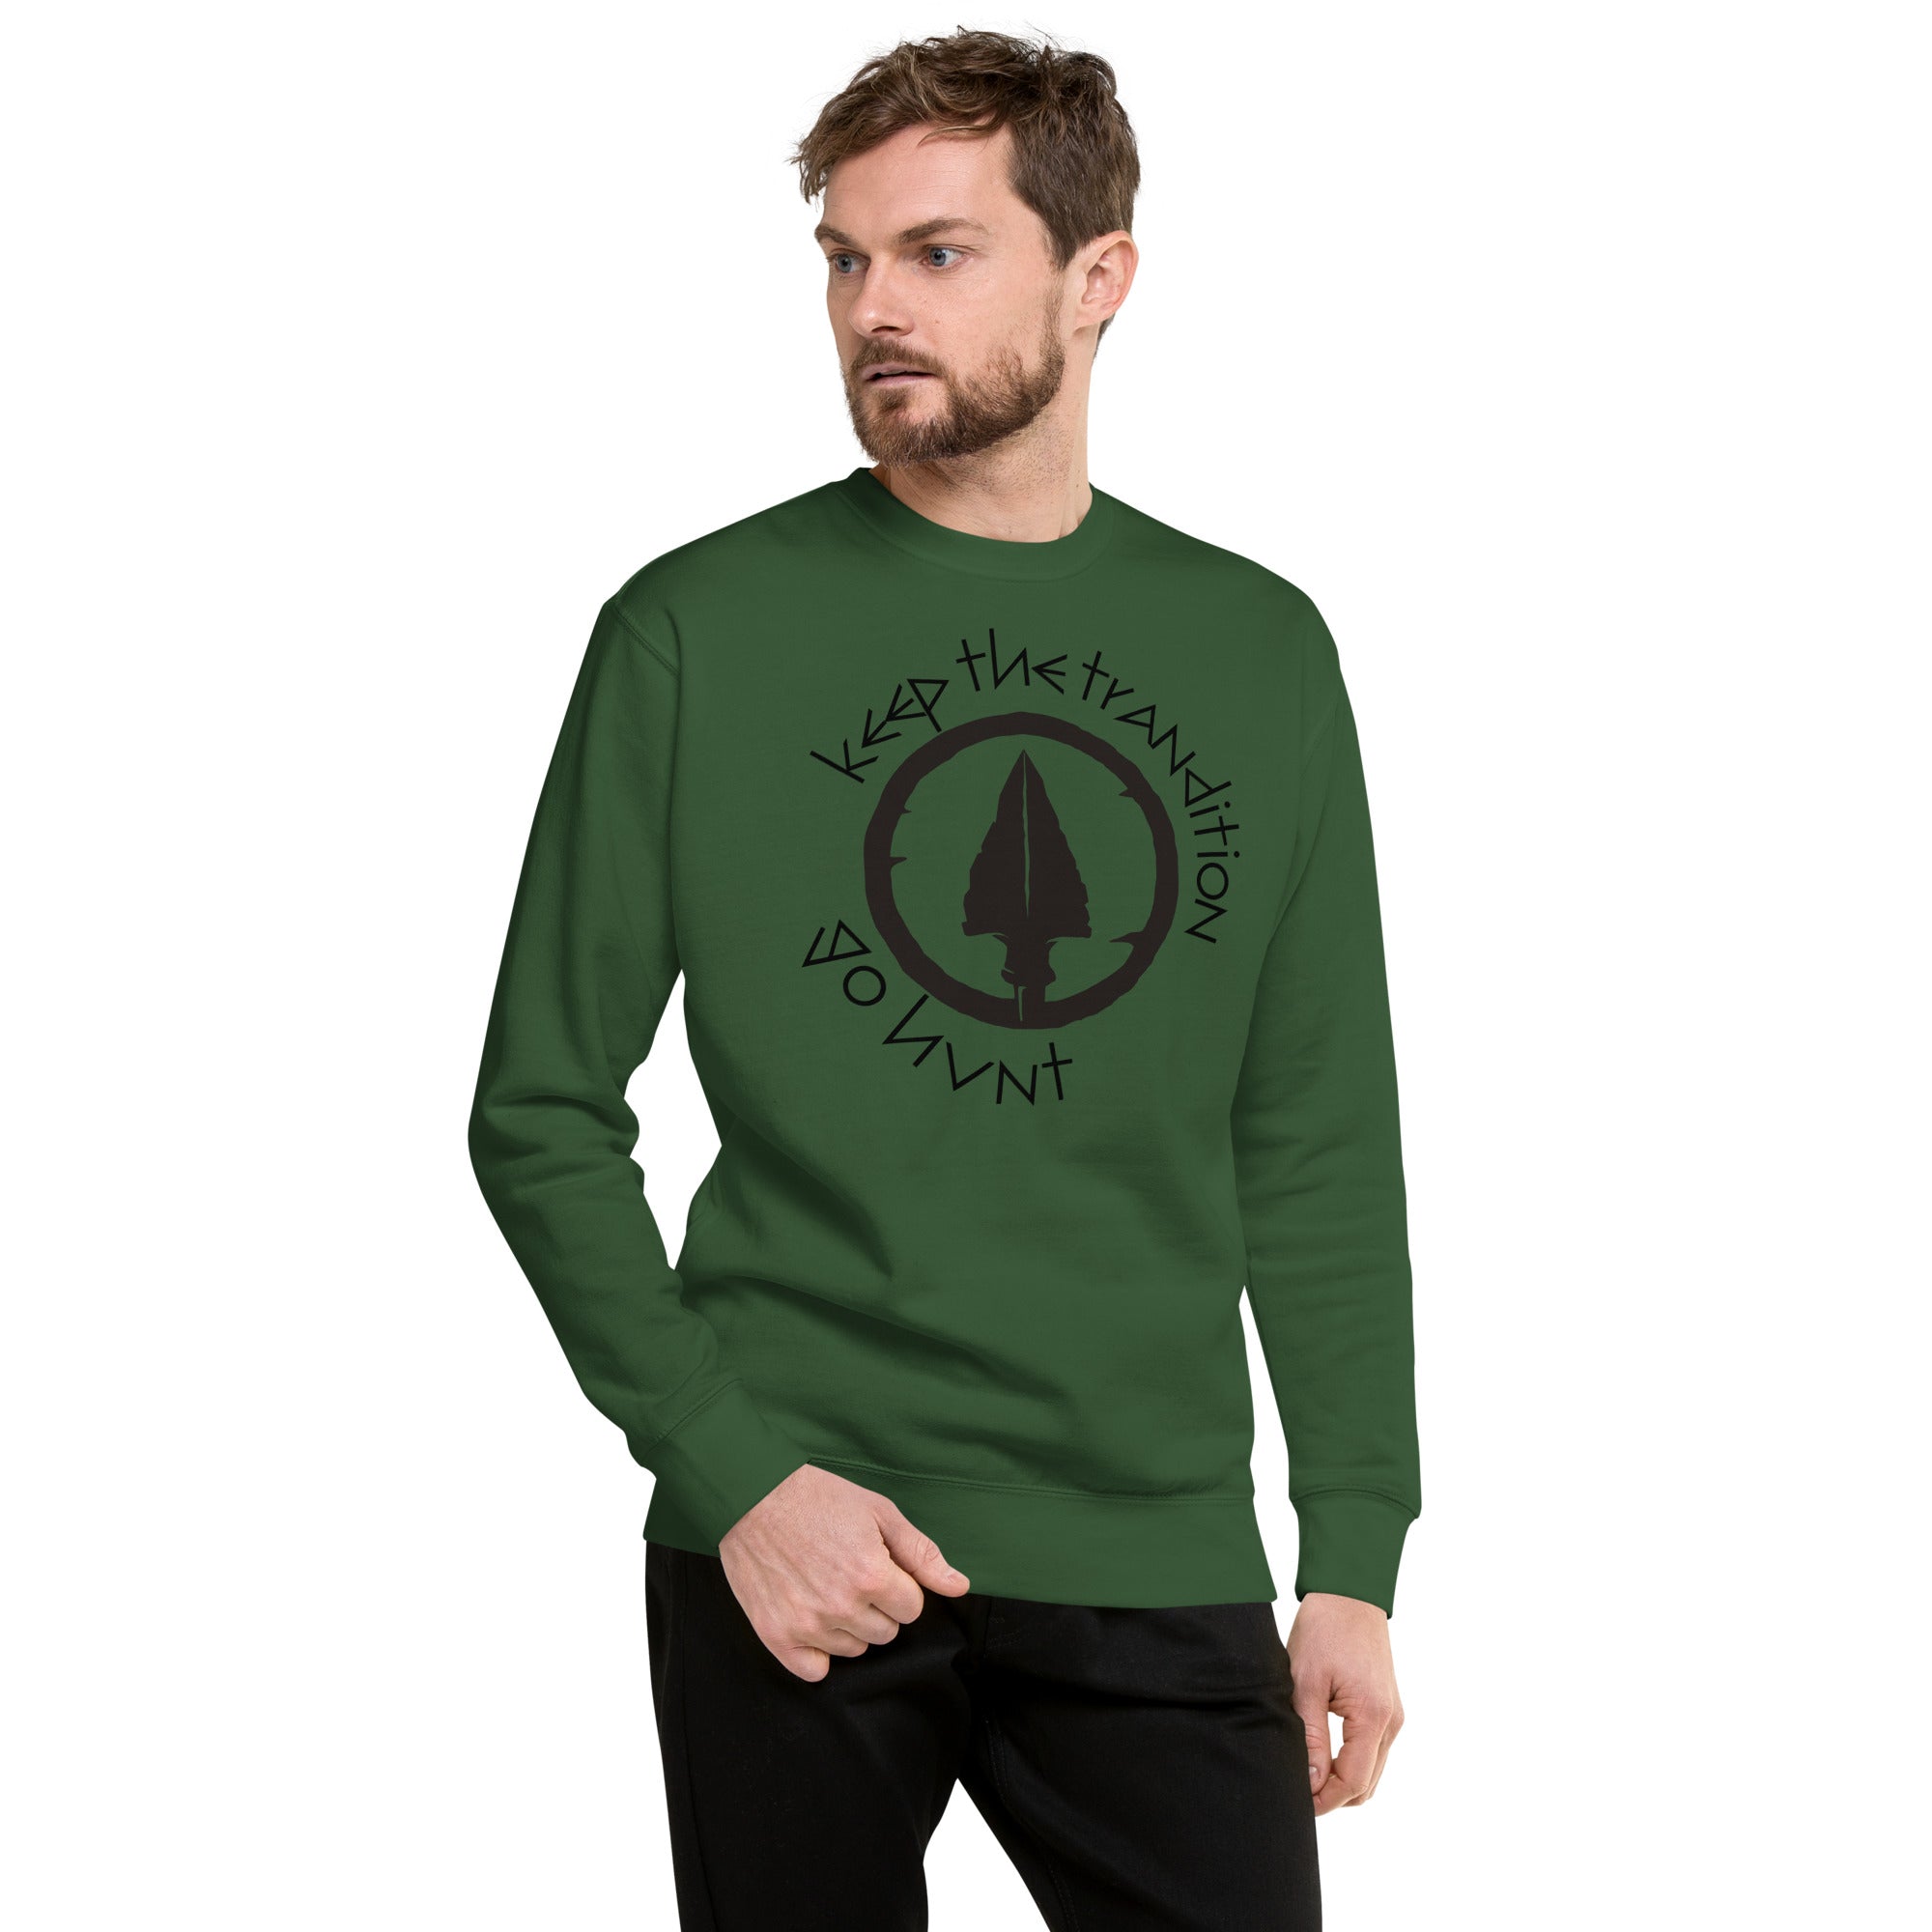 Keep The Tradition Heavy Crew Men's Sweatshirt - Go Hunt